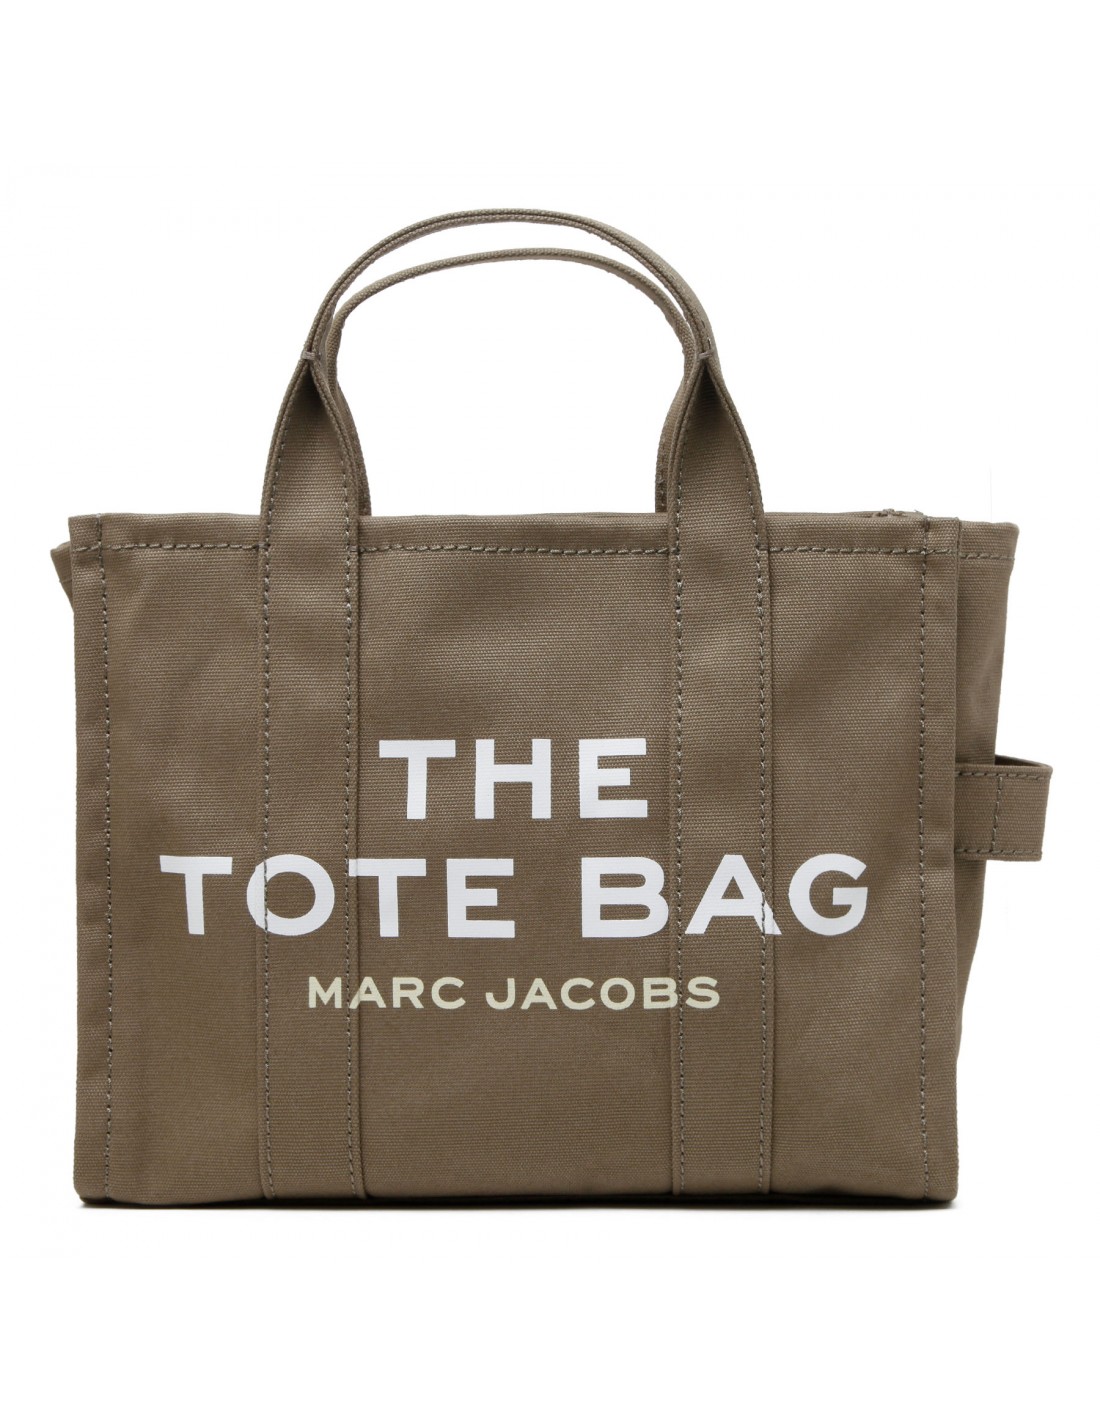 The Medium tote bag